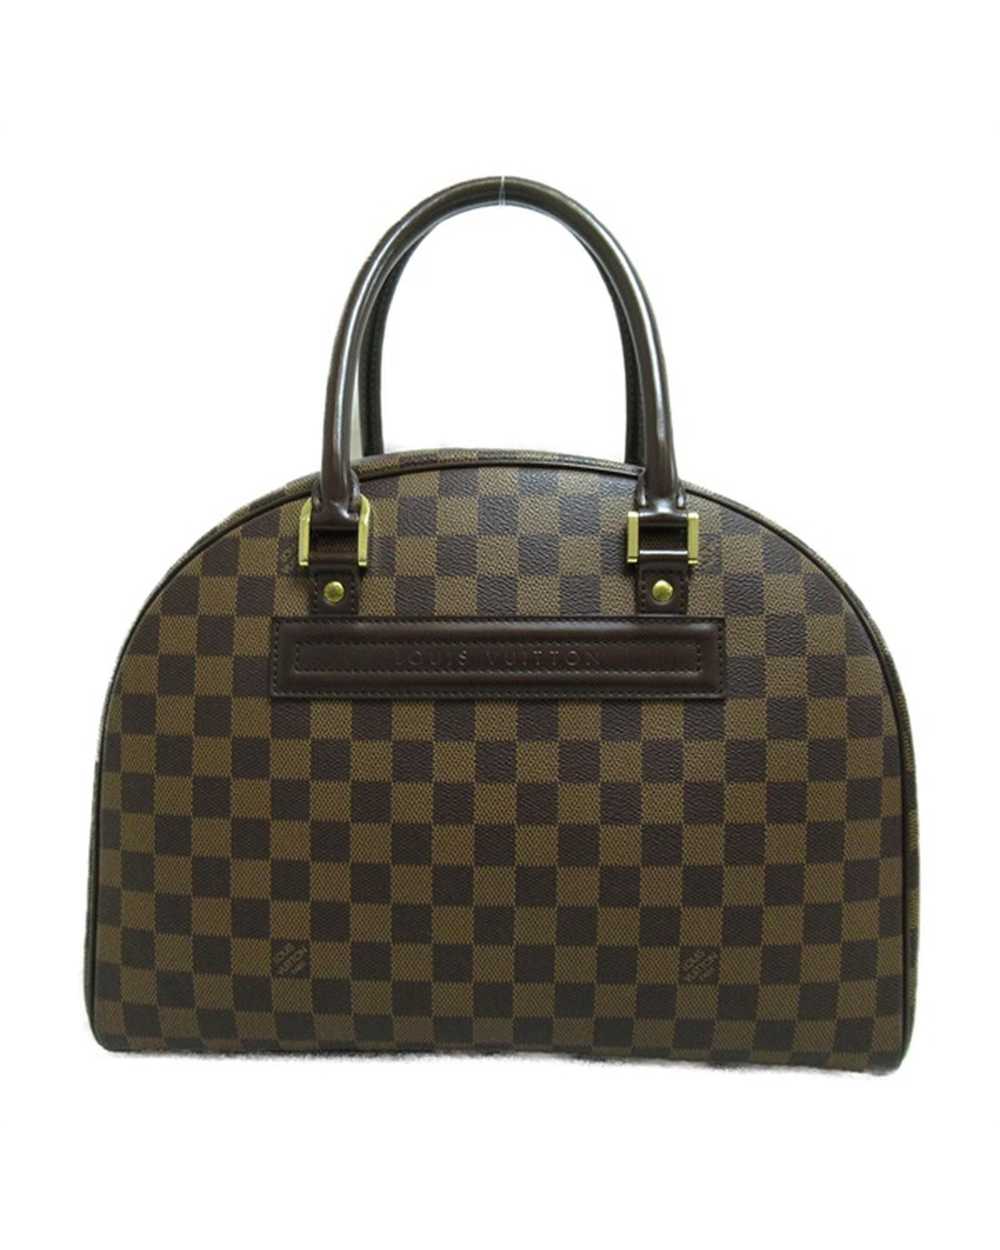 Louis Vuitton Designer Damier Ebene Bag in Excell… - image 2